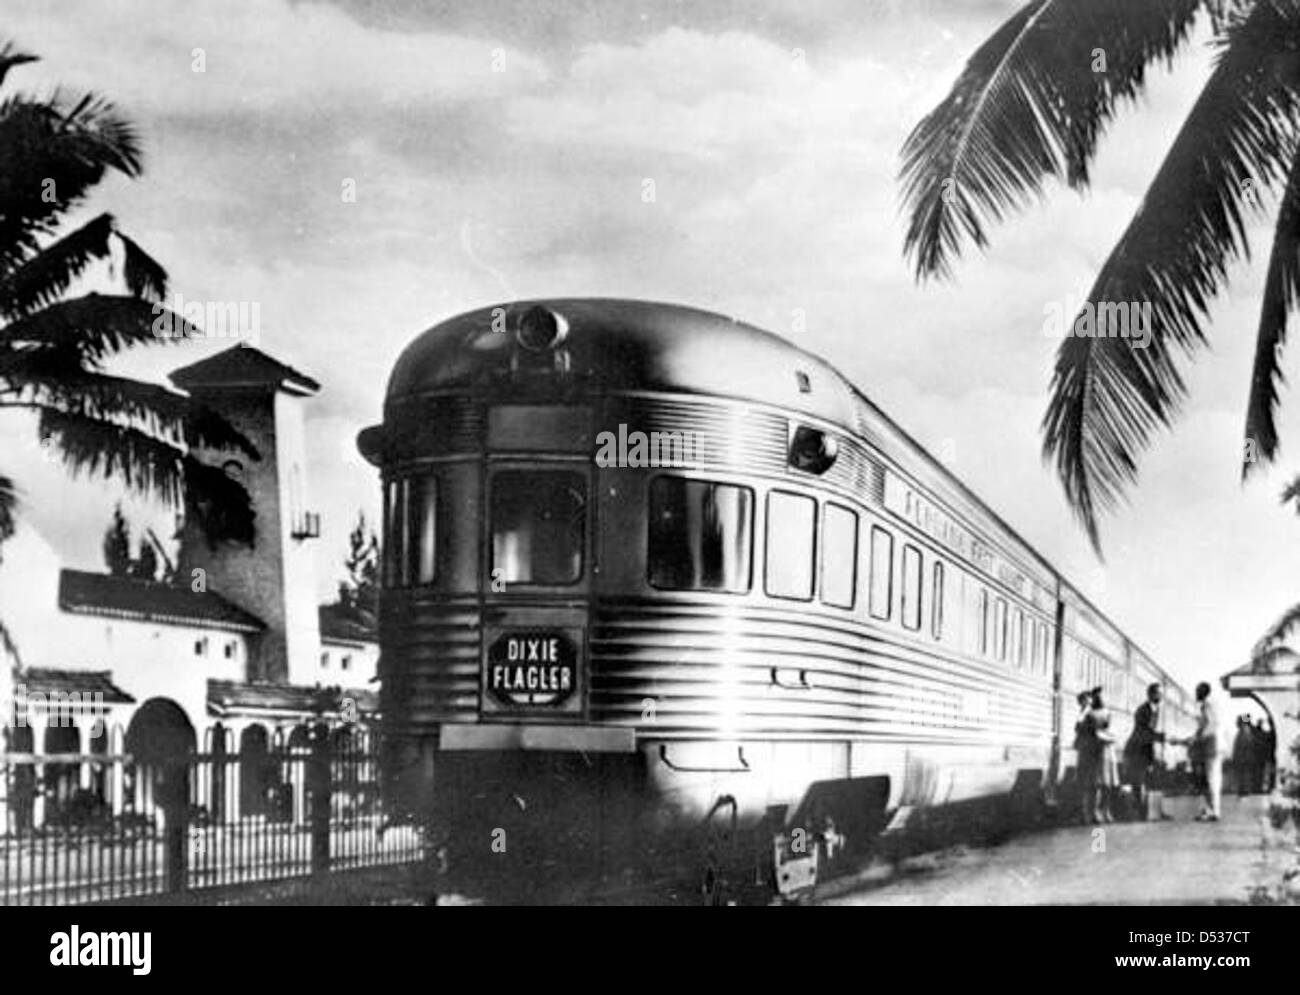 Dixie Flagler: Hollywood, Florida Stock Photo - Alamy